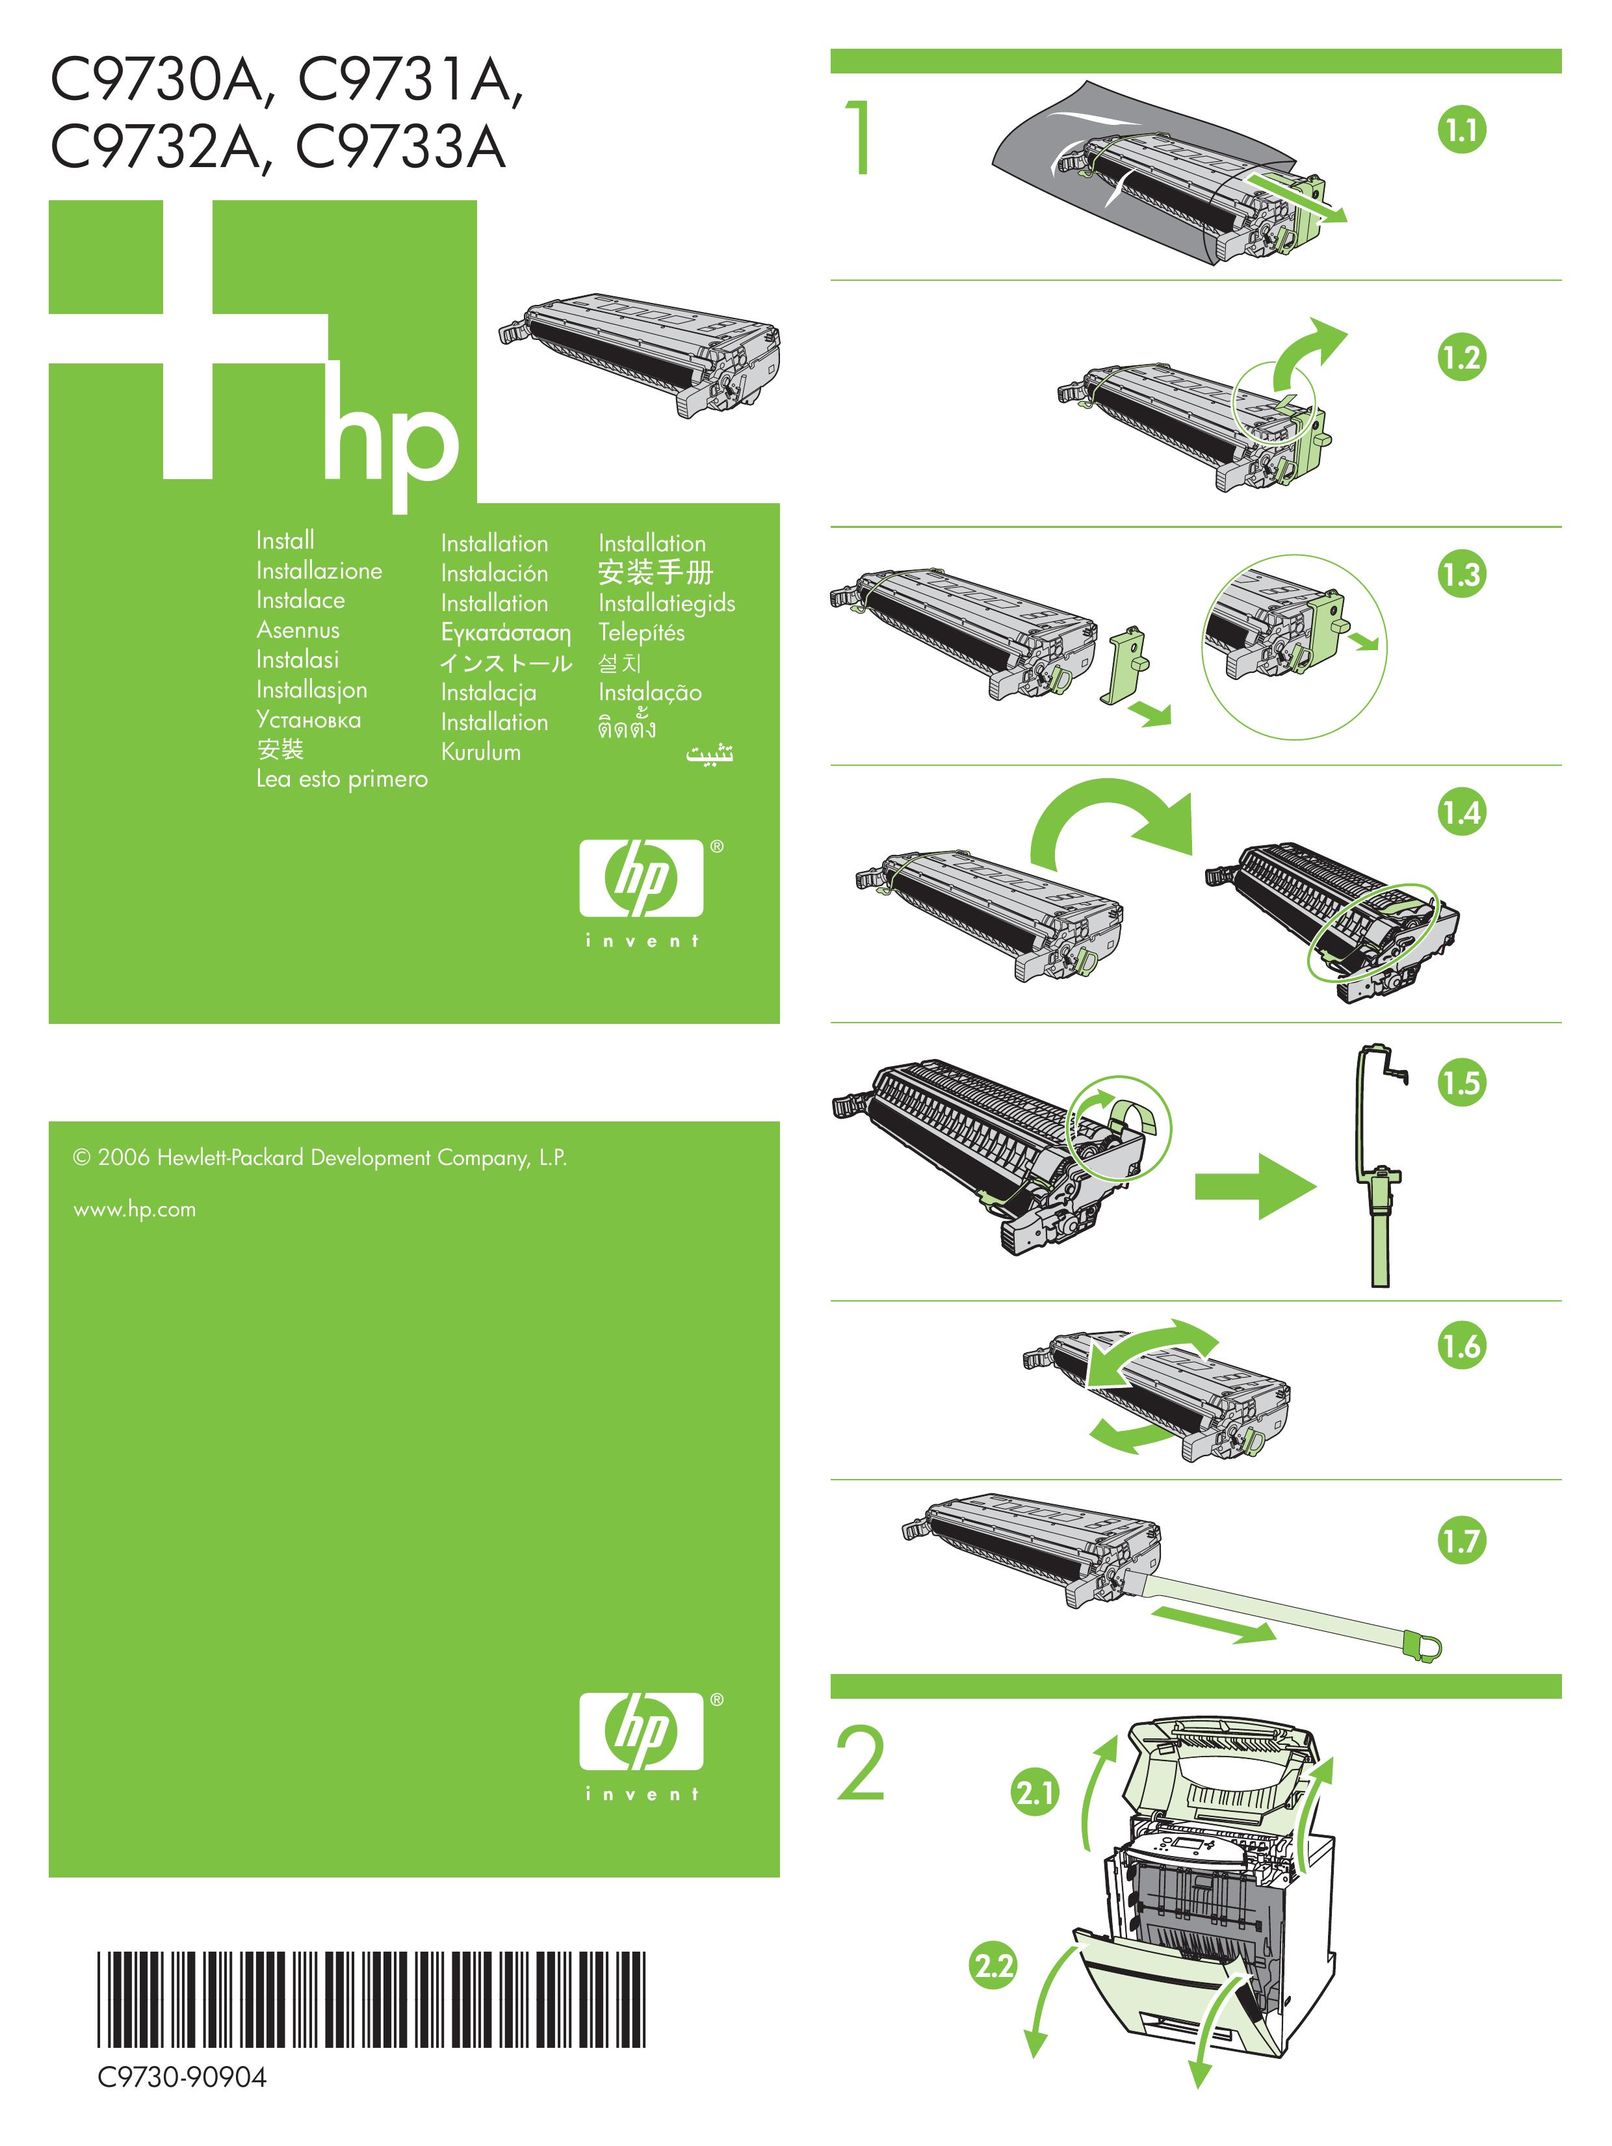 HP (Hewlett-Packard) C9733A Printer Accessories User Manual